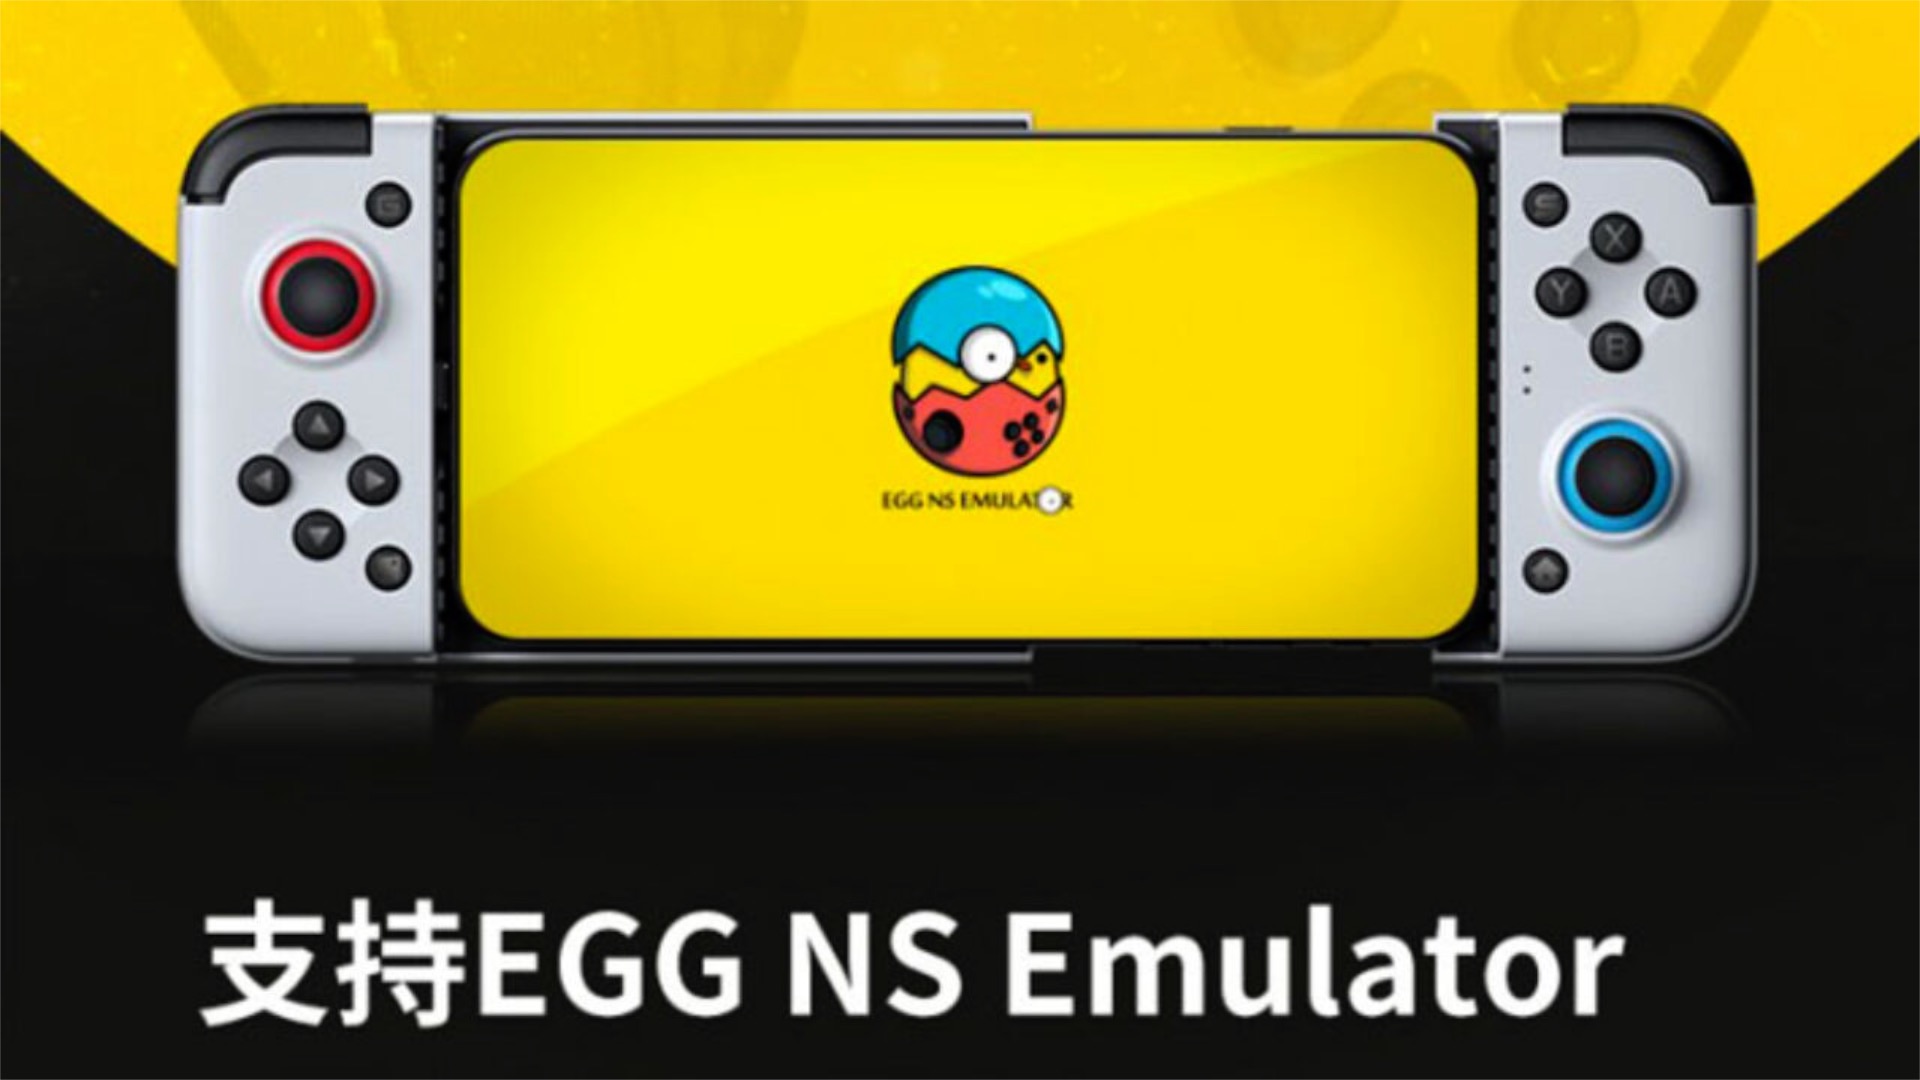 egg-ns-emulator-update.ipa